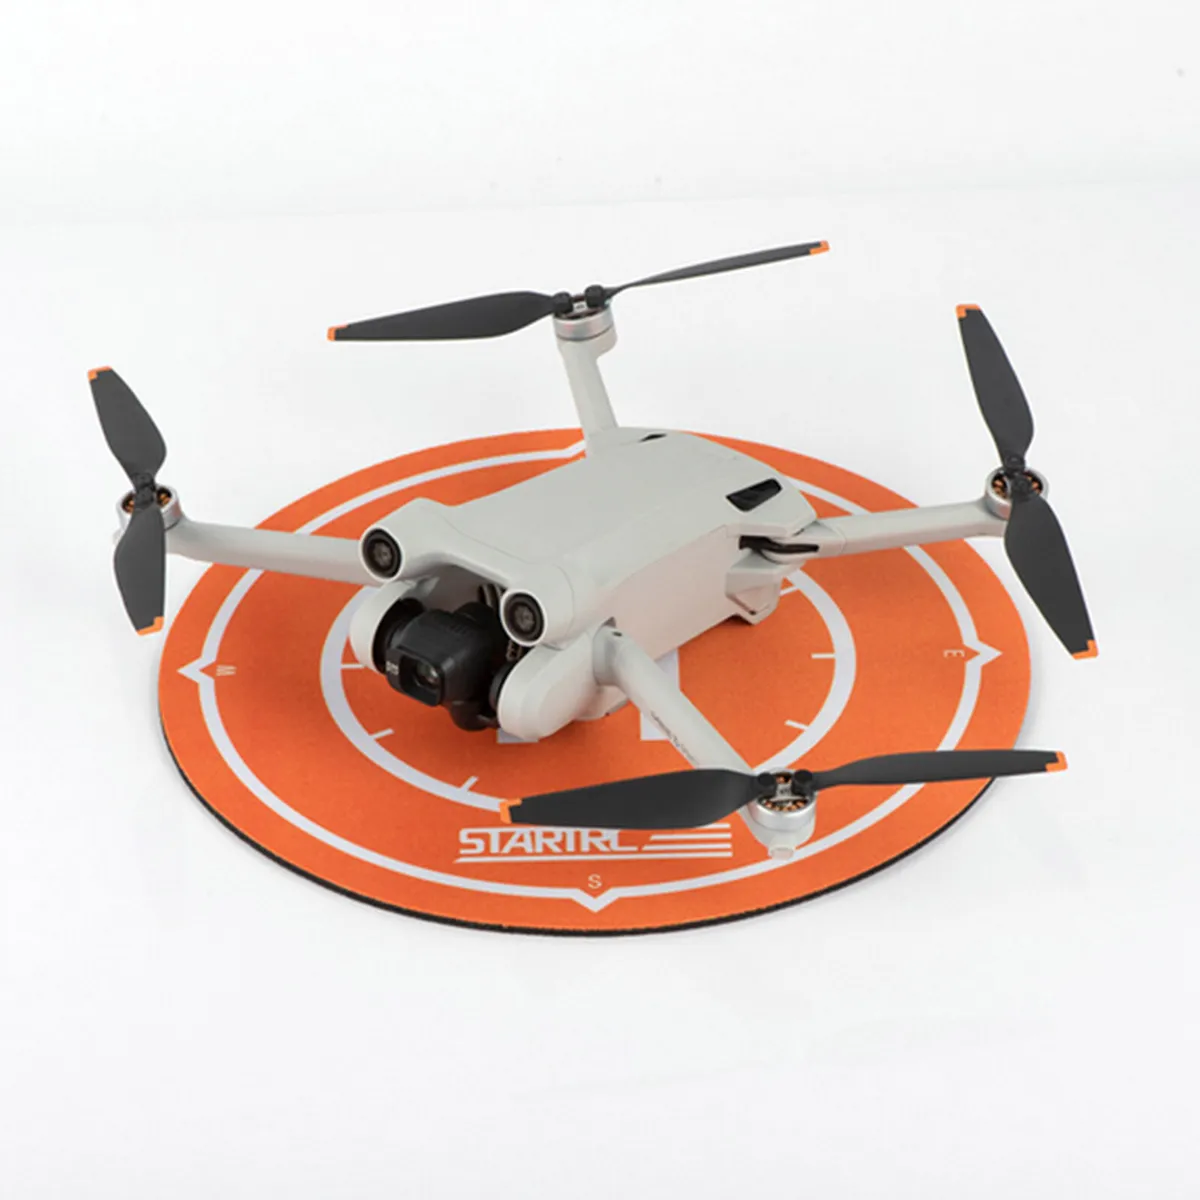 25cm Drone Landing Pad For DJI Mavic Mini 3 Pro/2/SE/Spark/Mavic Air  Accessories